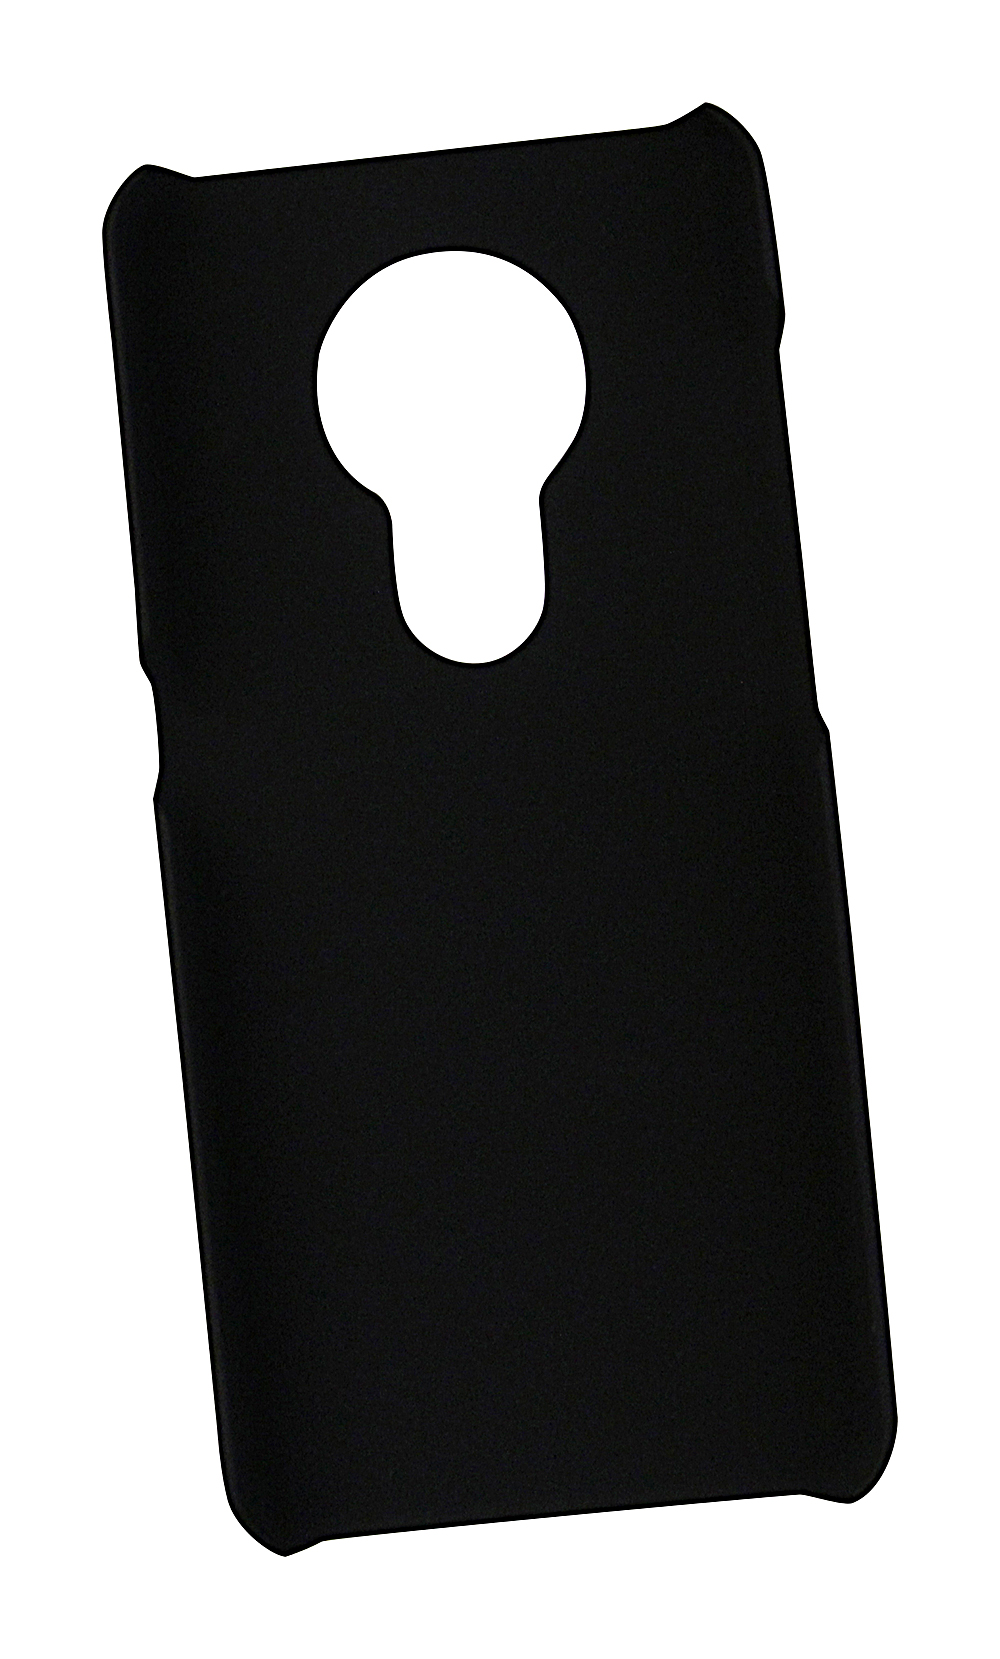 Skimblocker Magnet Wallet Nokia 6.2 / 7.2